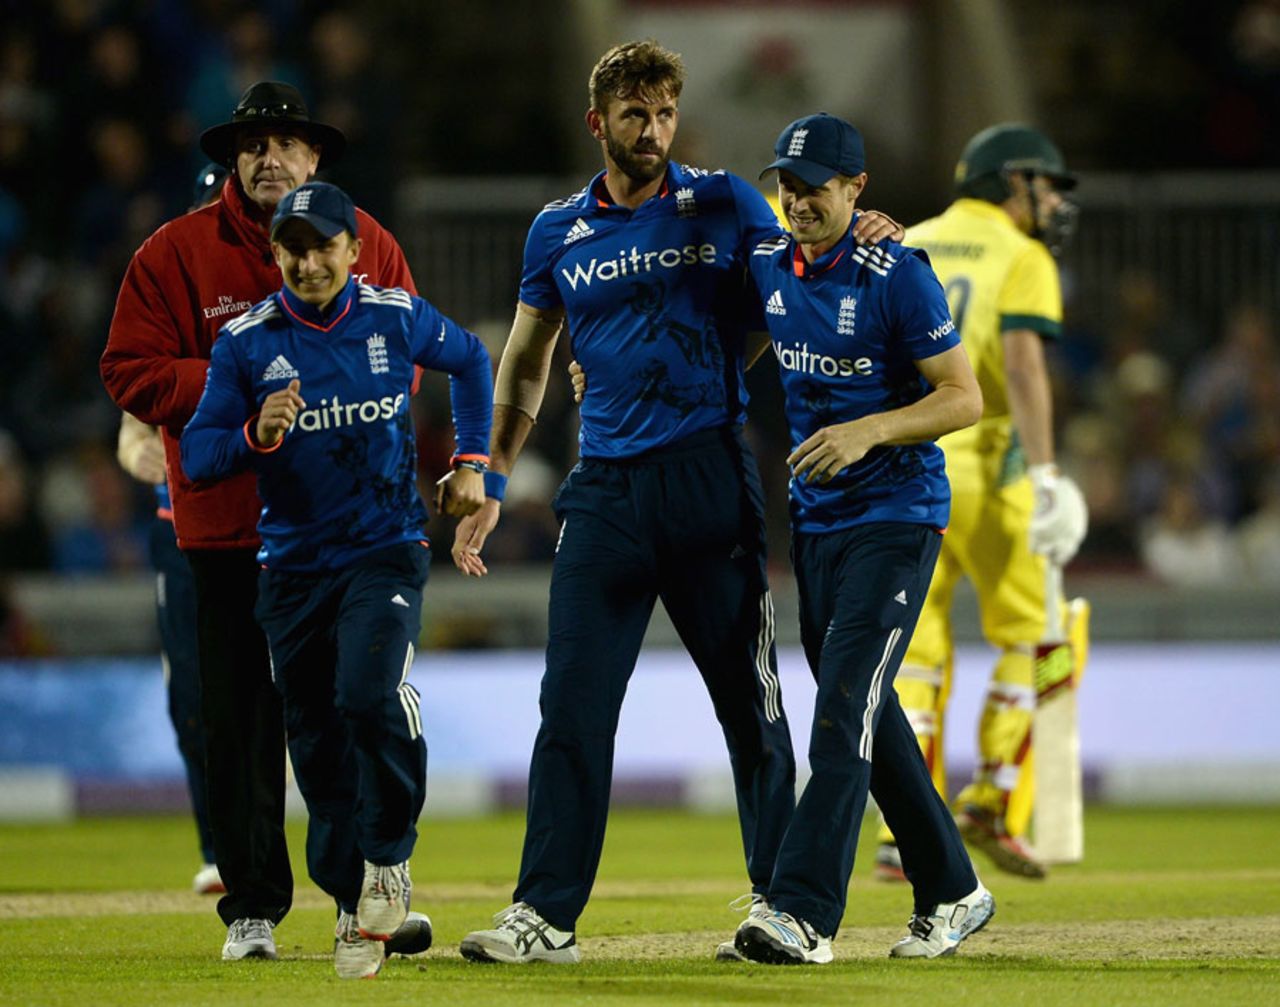 Liam Plunkett picked up three wickets, England v Australia, 3rd ODI, Old Trafford, September 8, 2015